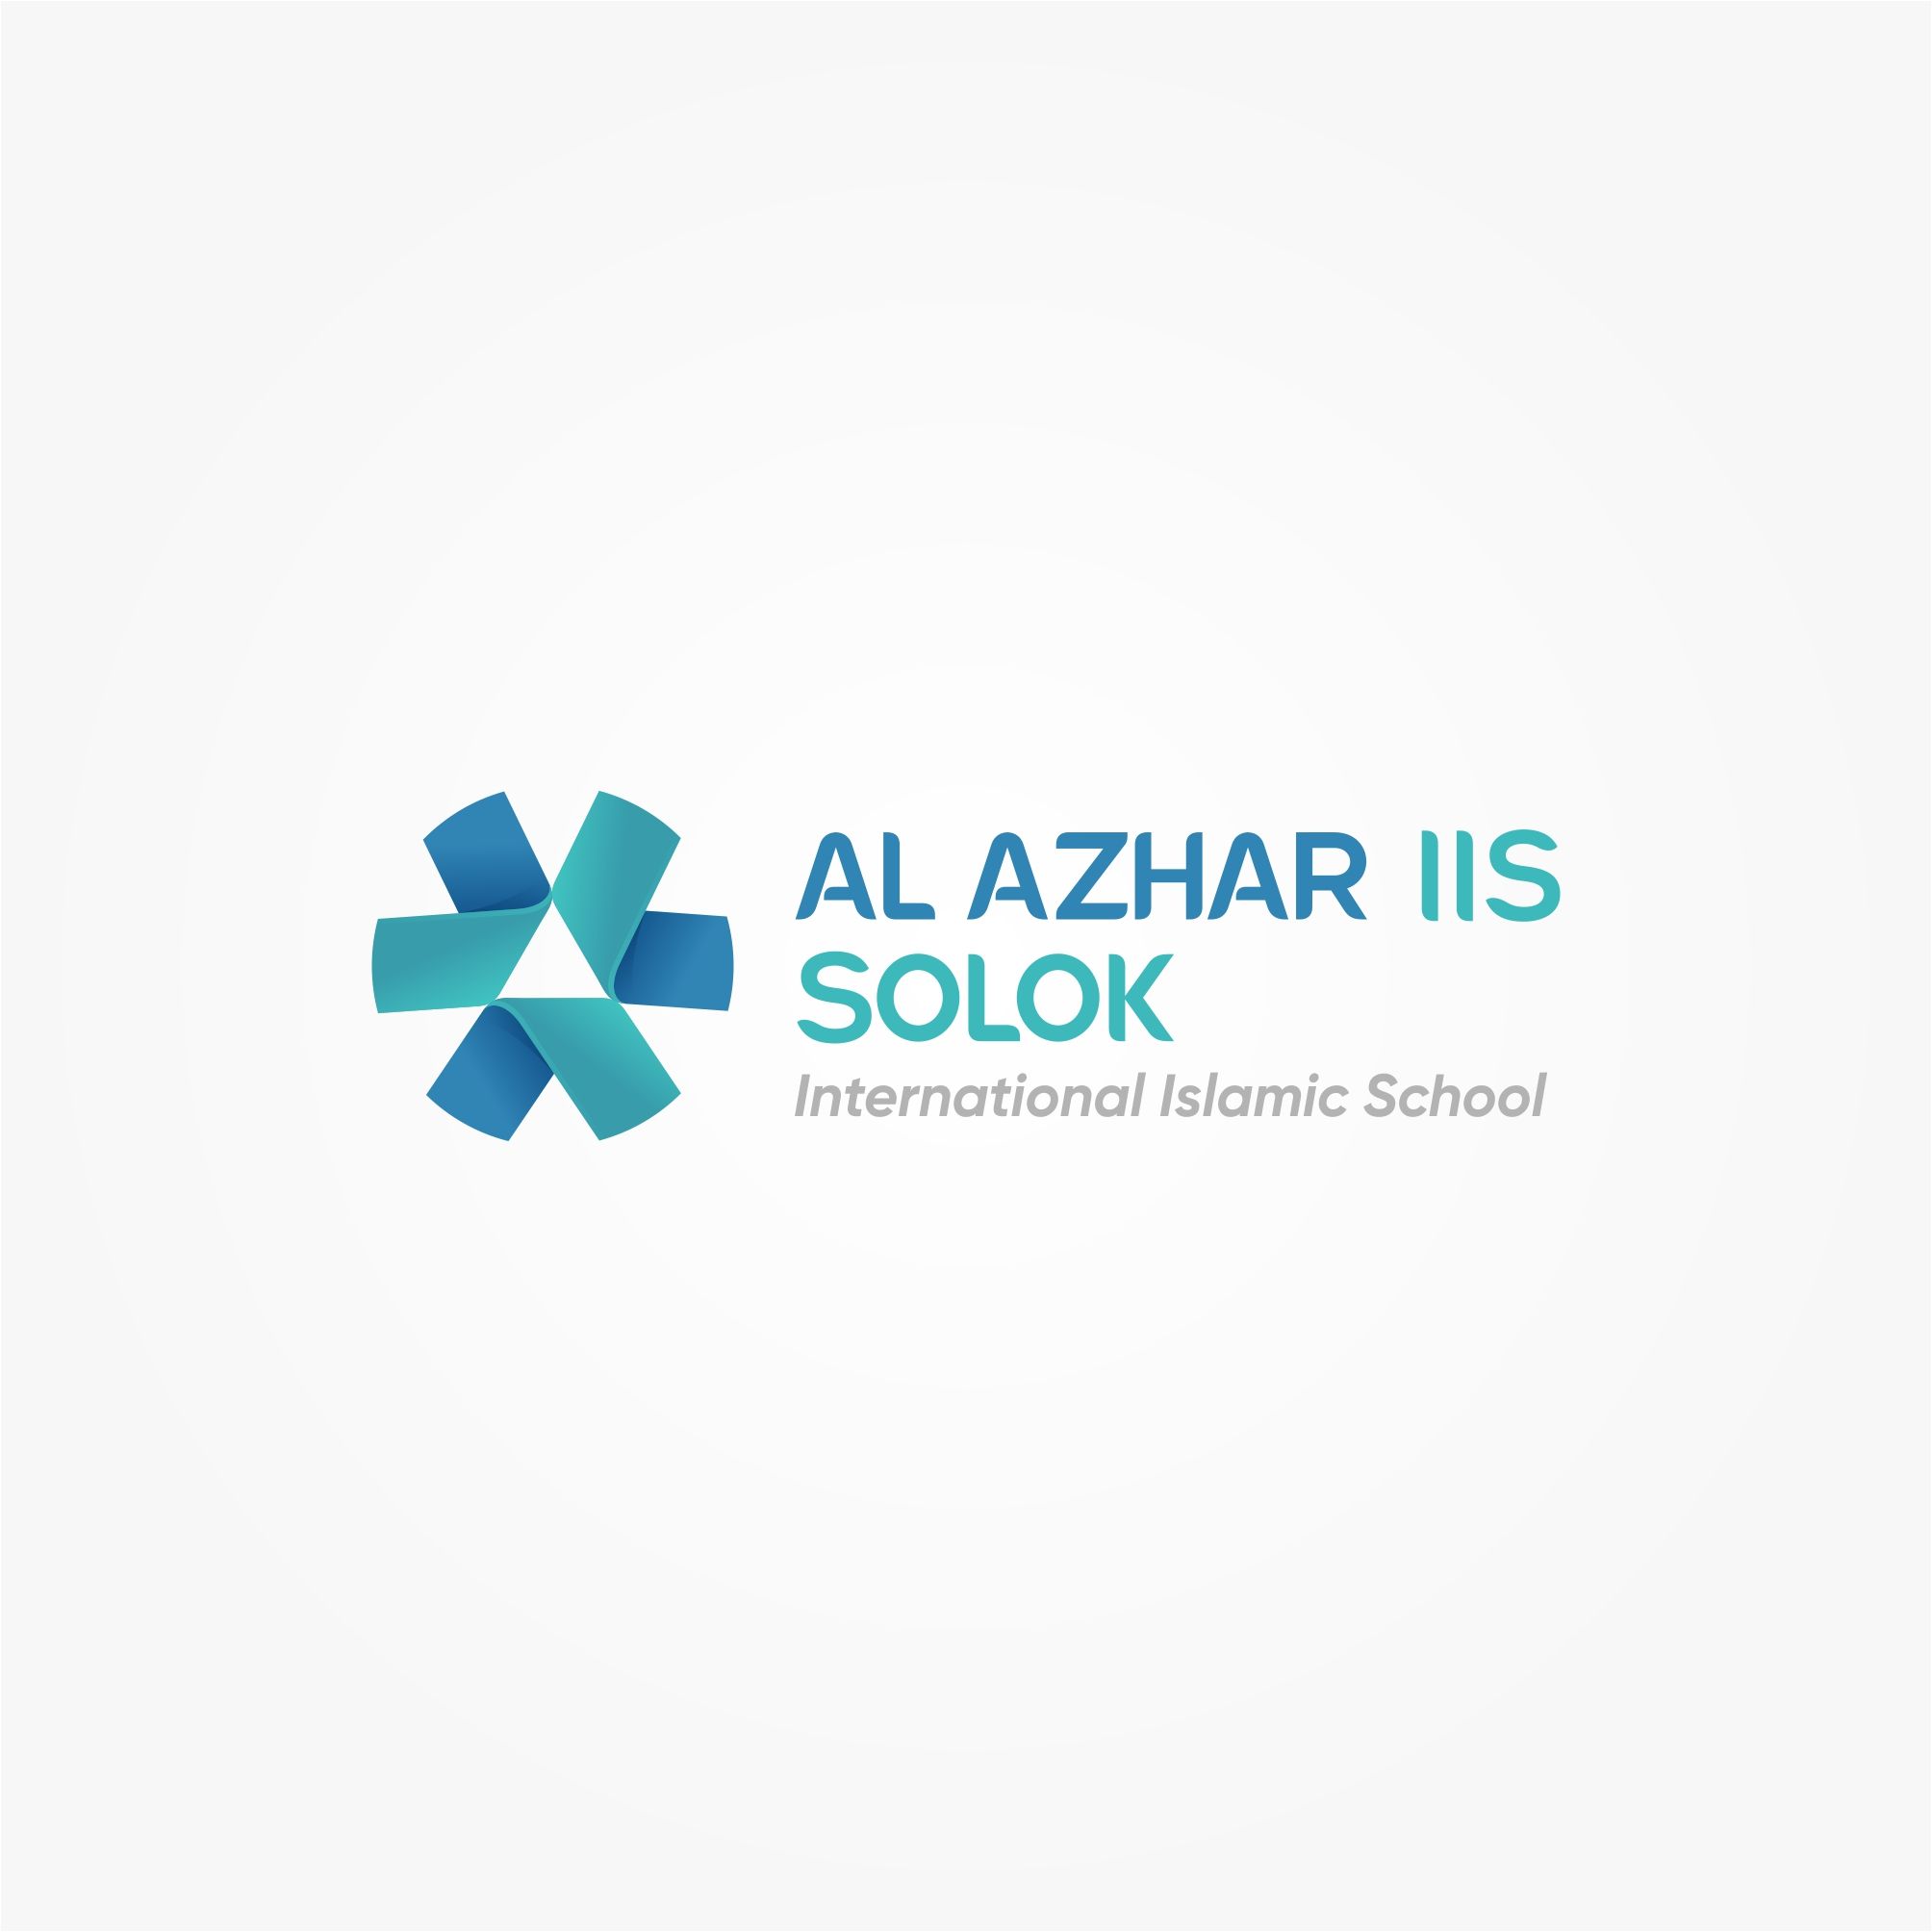 Al Azhar IIS Solok